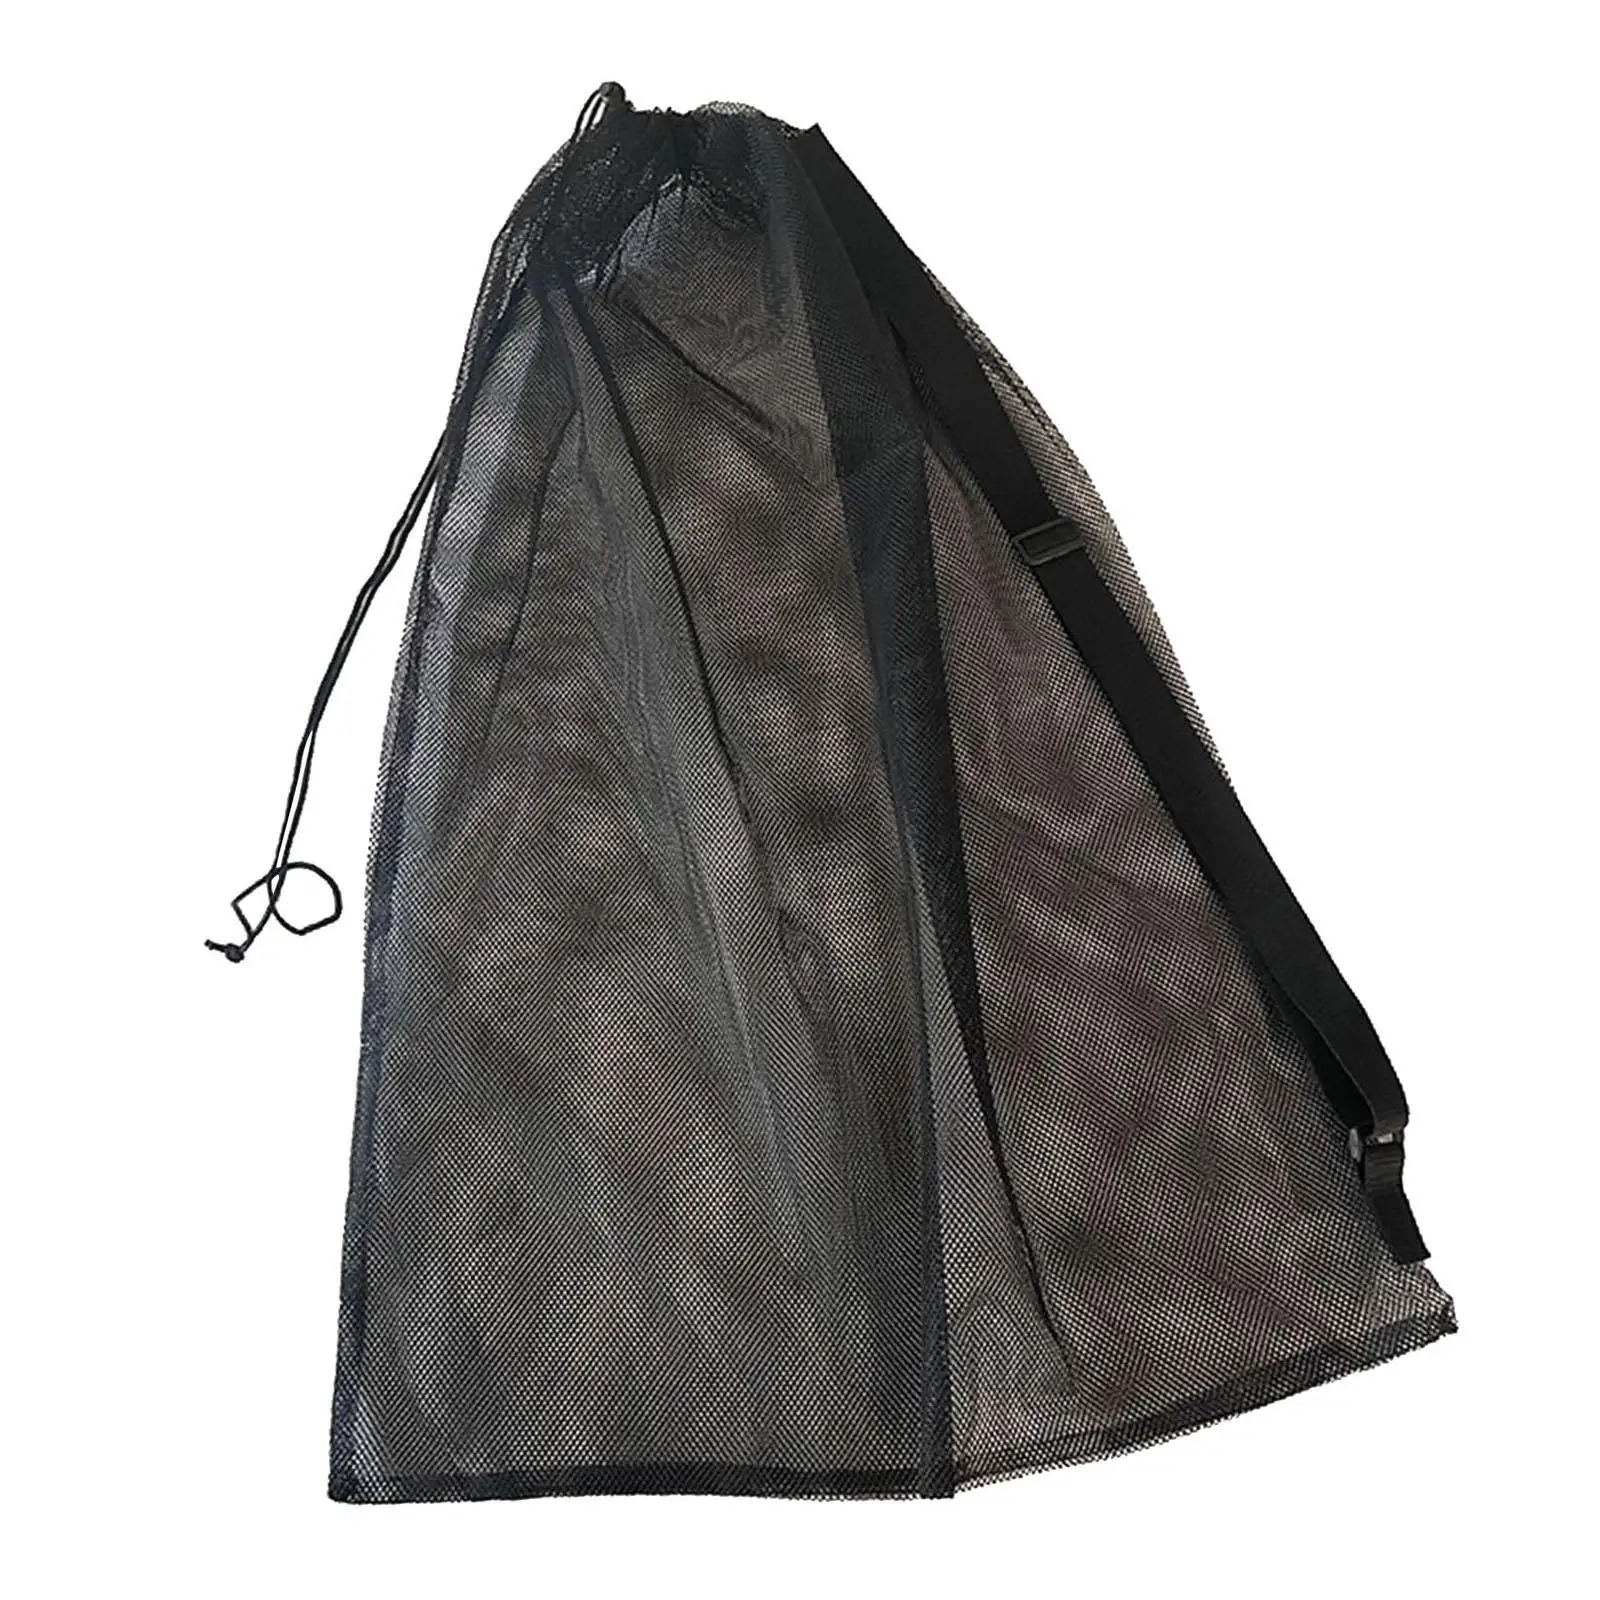 Ball Carrier Bag Drawstring Bags Shoulder Bag Mesh Sport Equipment Bag for Sports Balls Volleyball Football Soccer Basketball